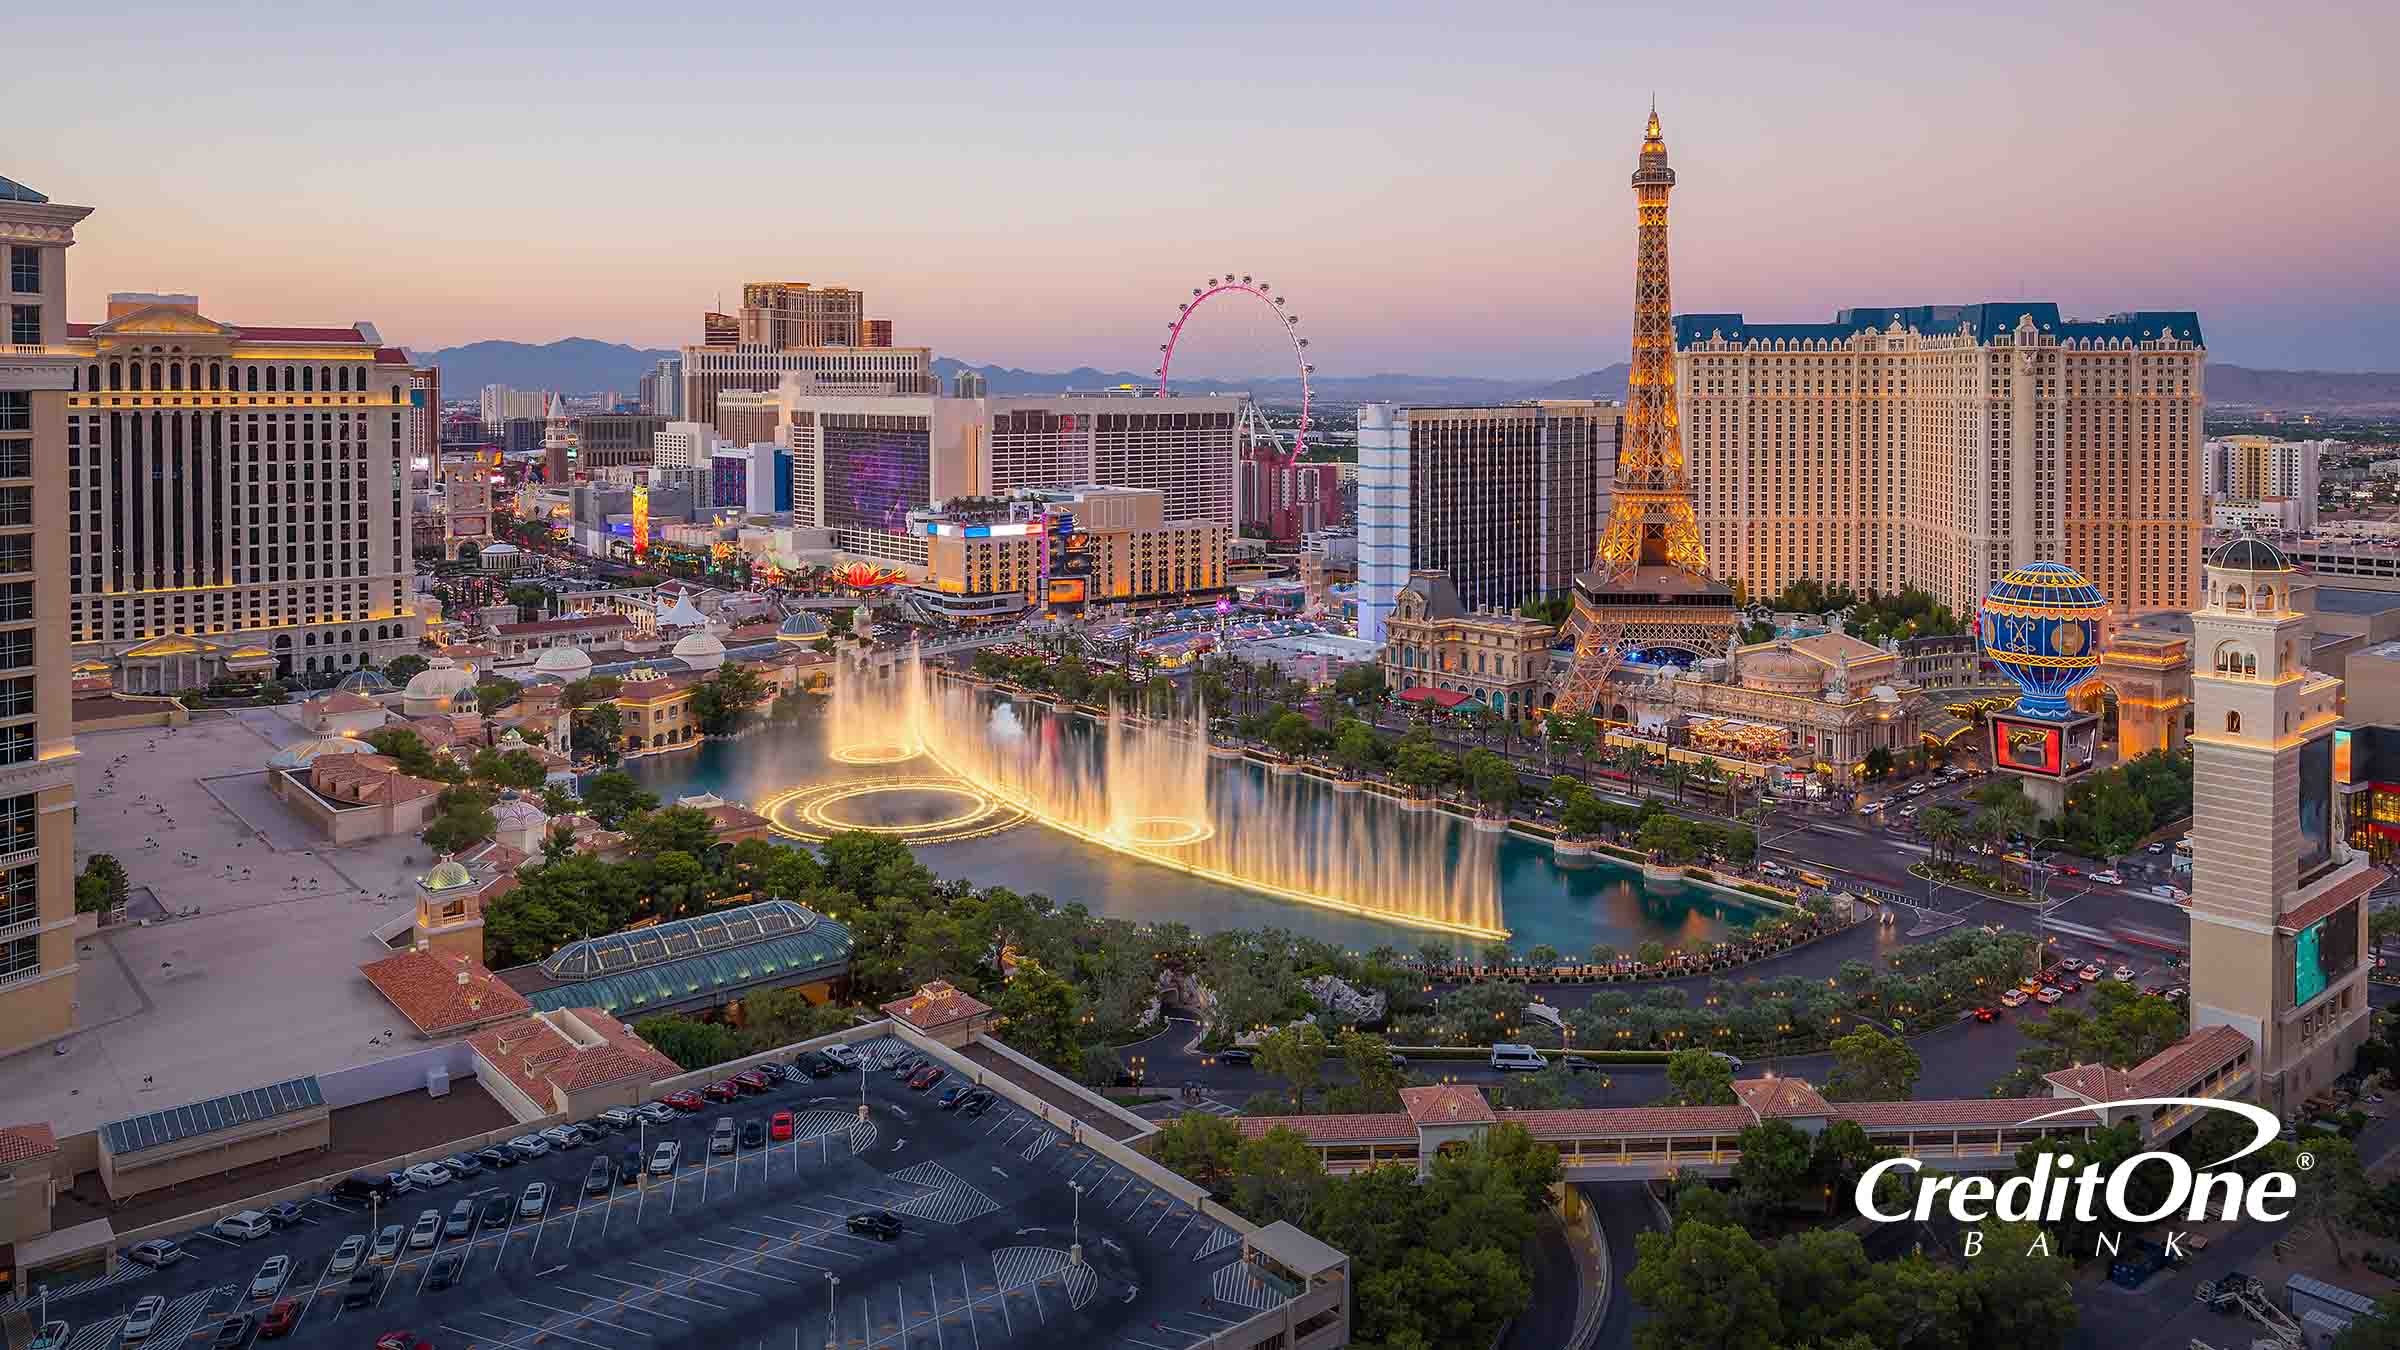 Skyline of Las Vegas, full of must-see attractions